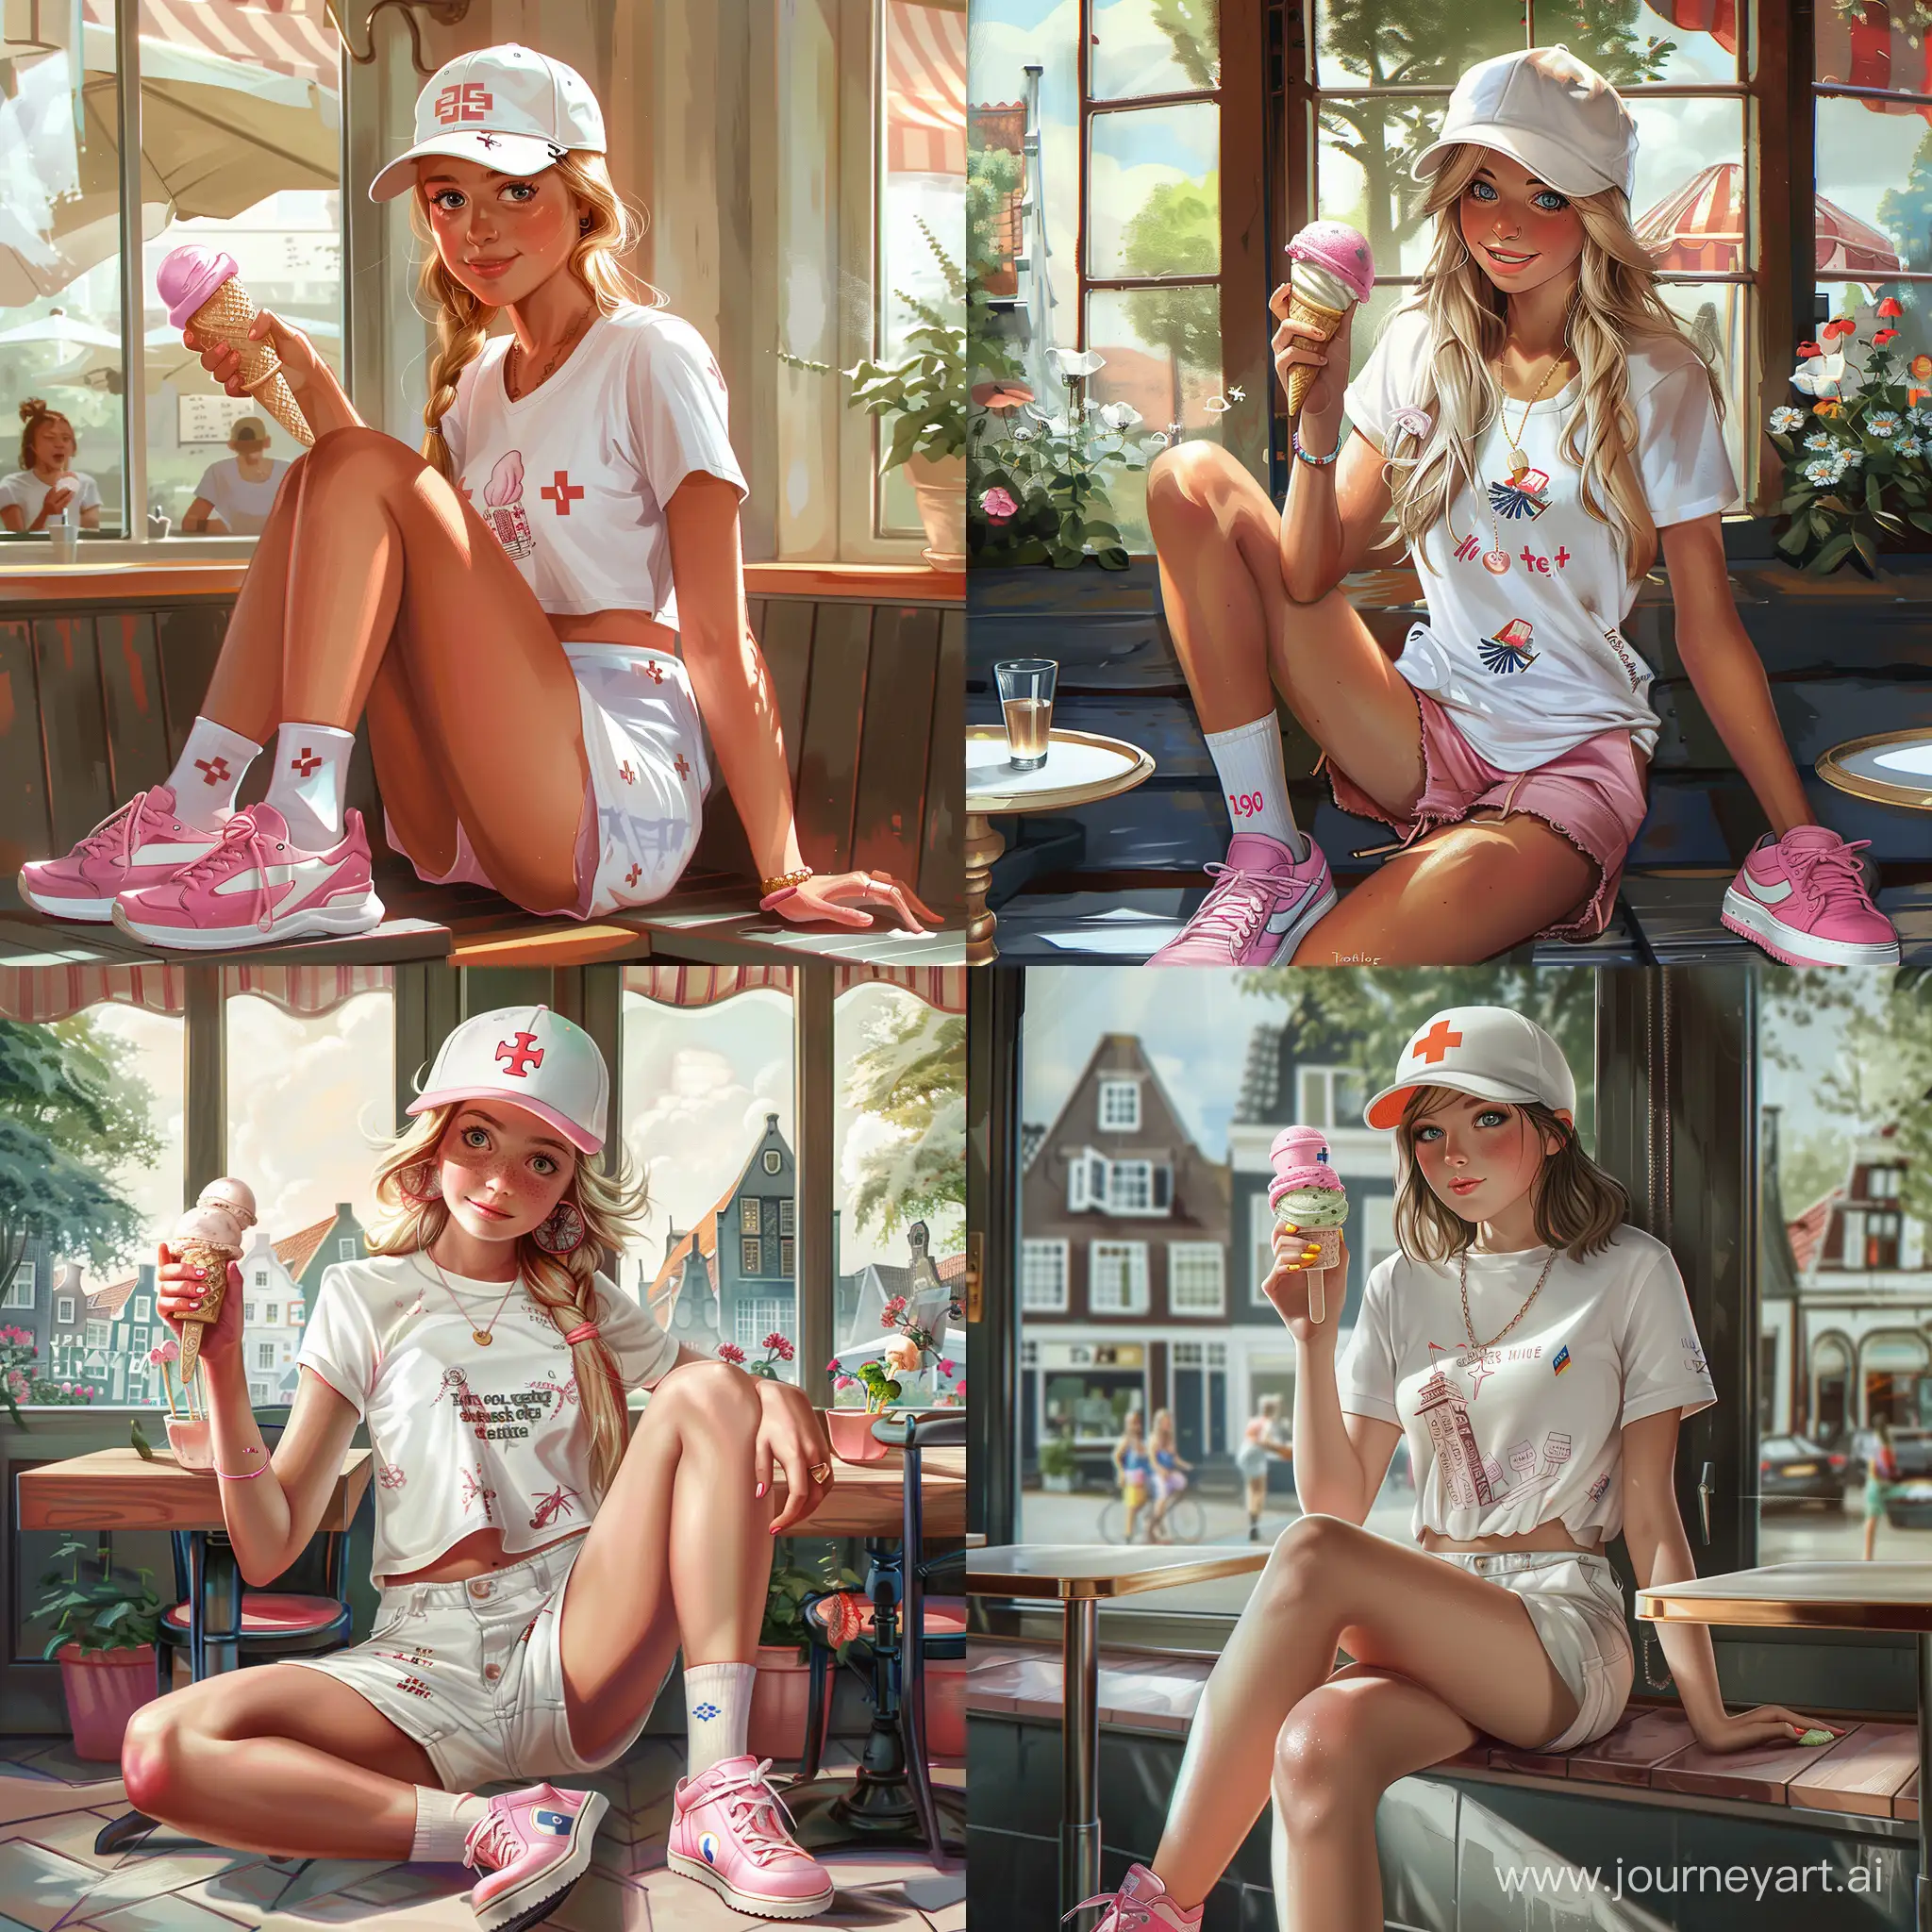 Girl-Enjoying-Ice-Cream-in-Stylish-Summer-Outfit-at-NetherlandsThemed-Caf